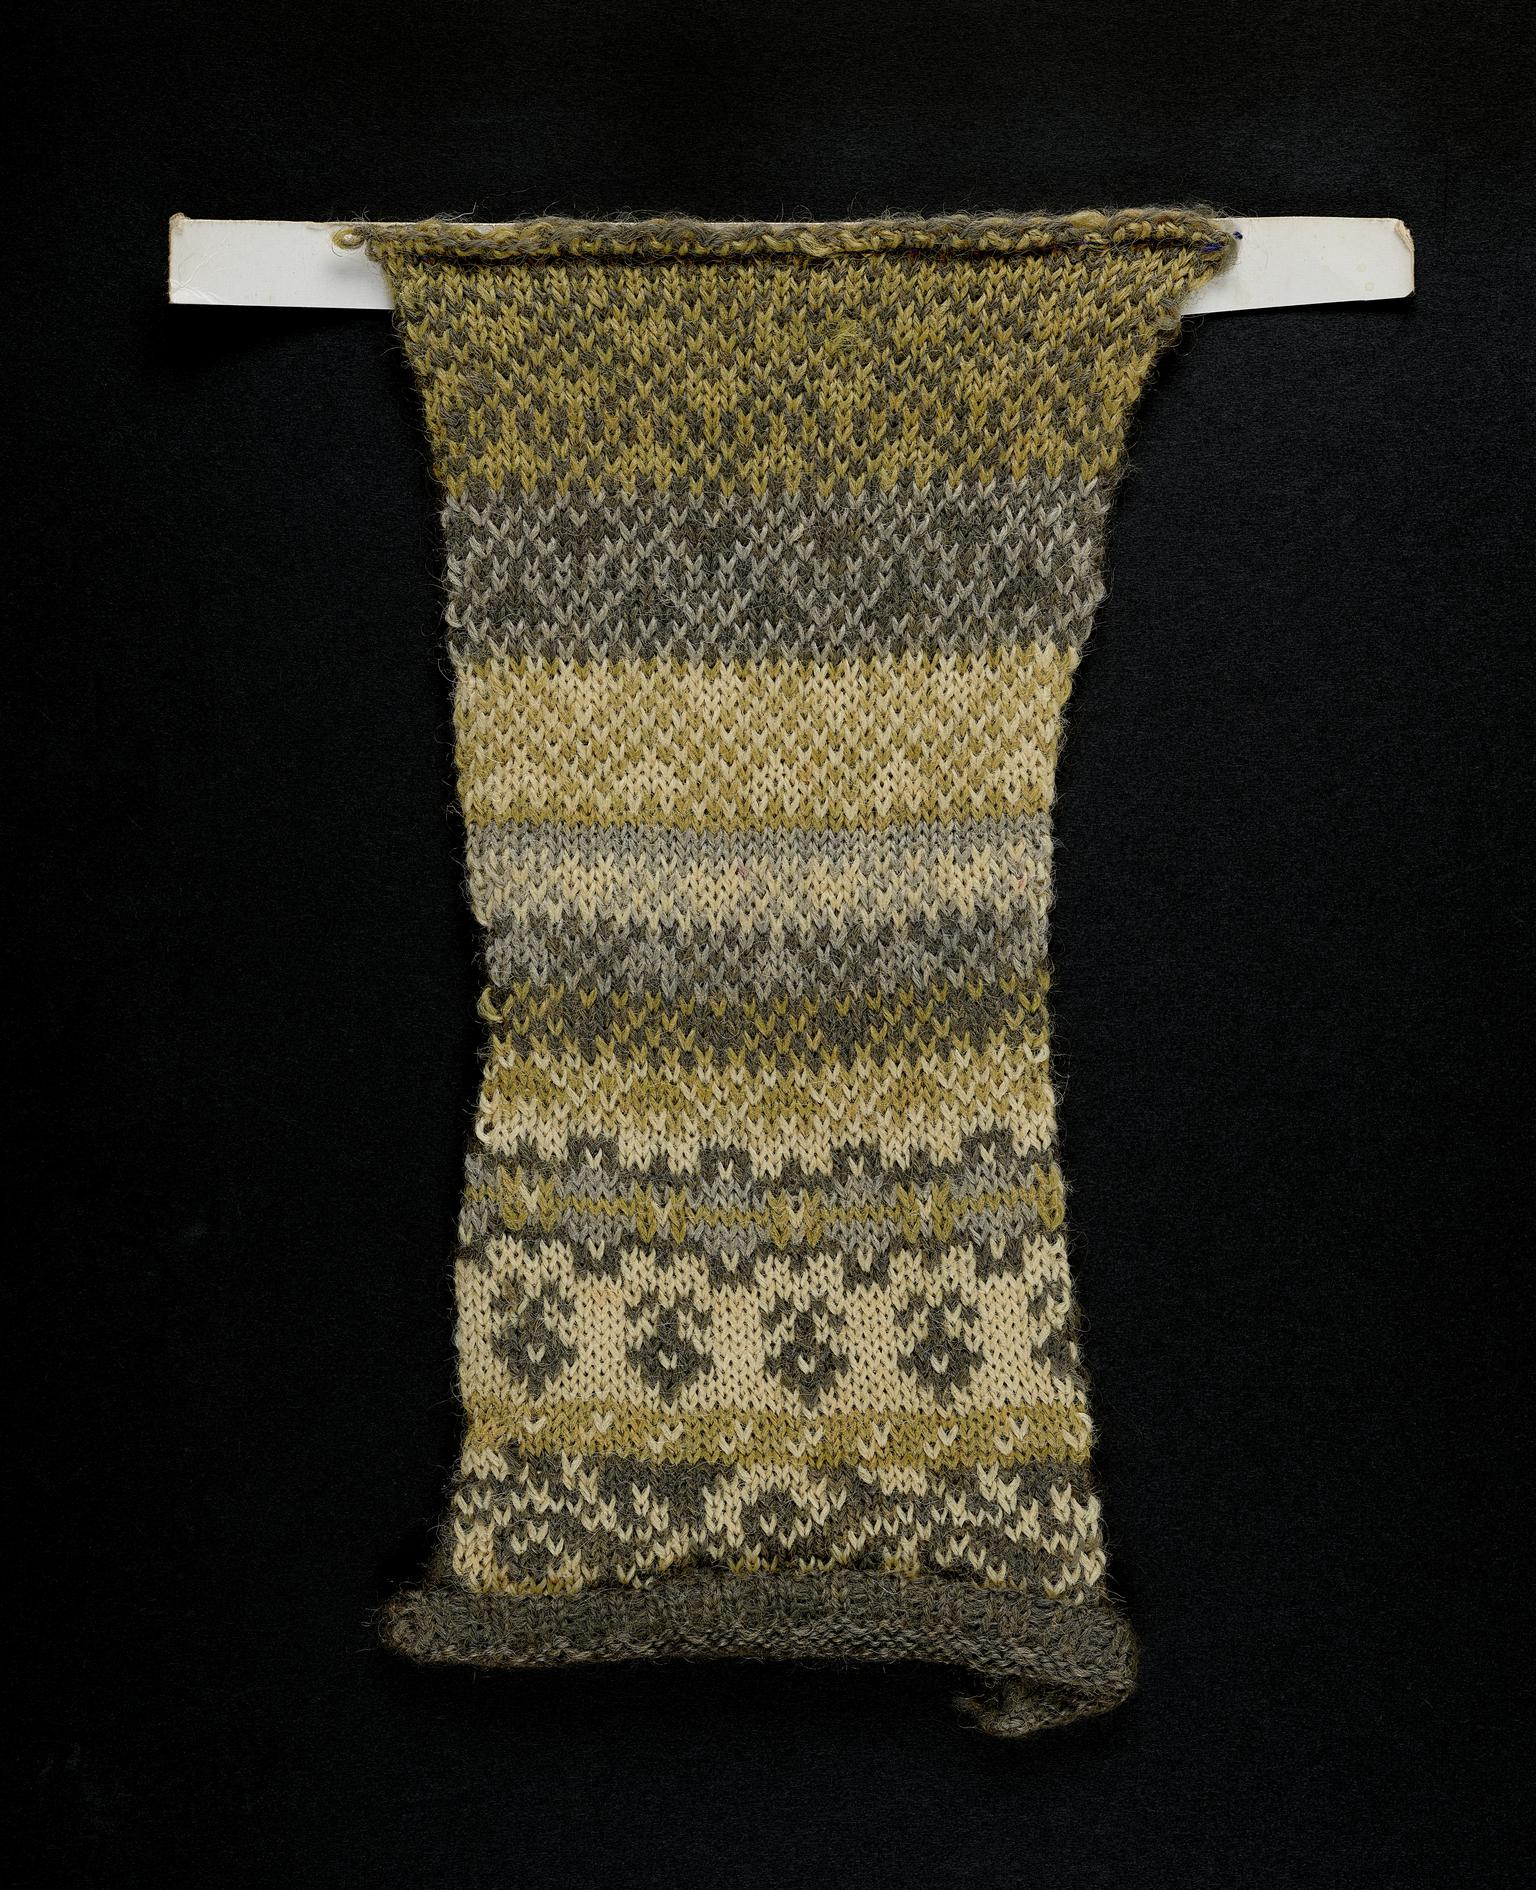 Knitting sample